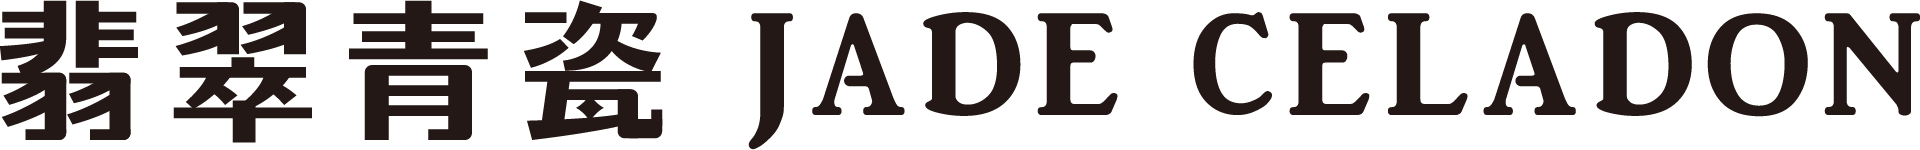 values projects jadeceladon typography 002